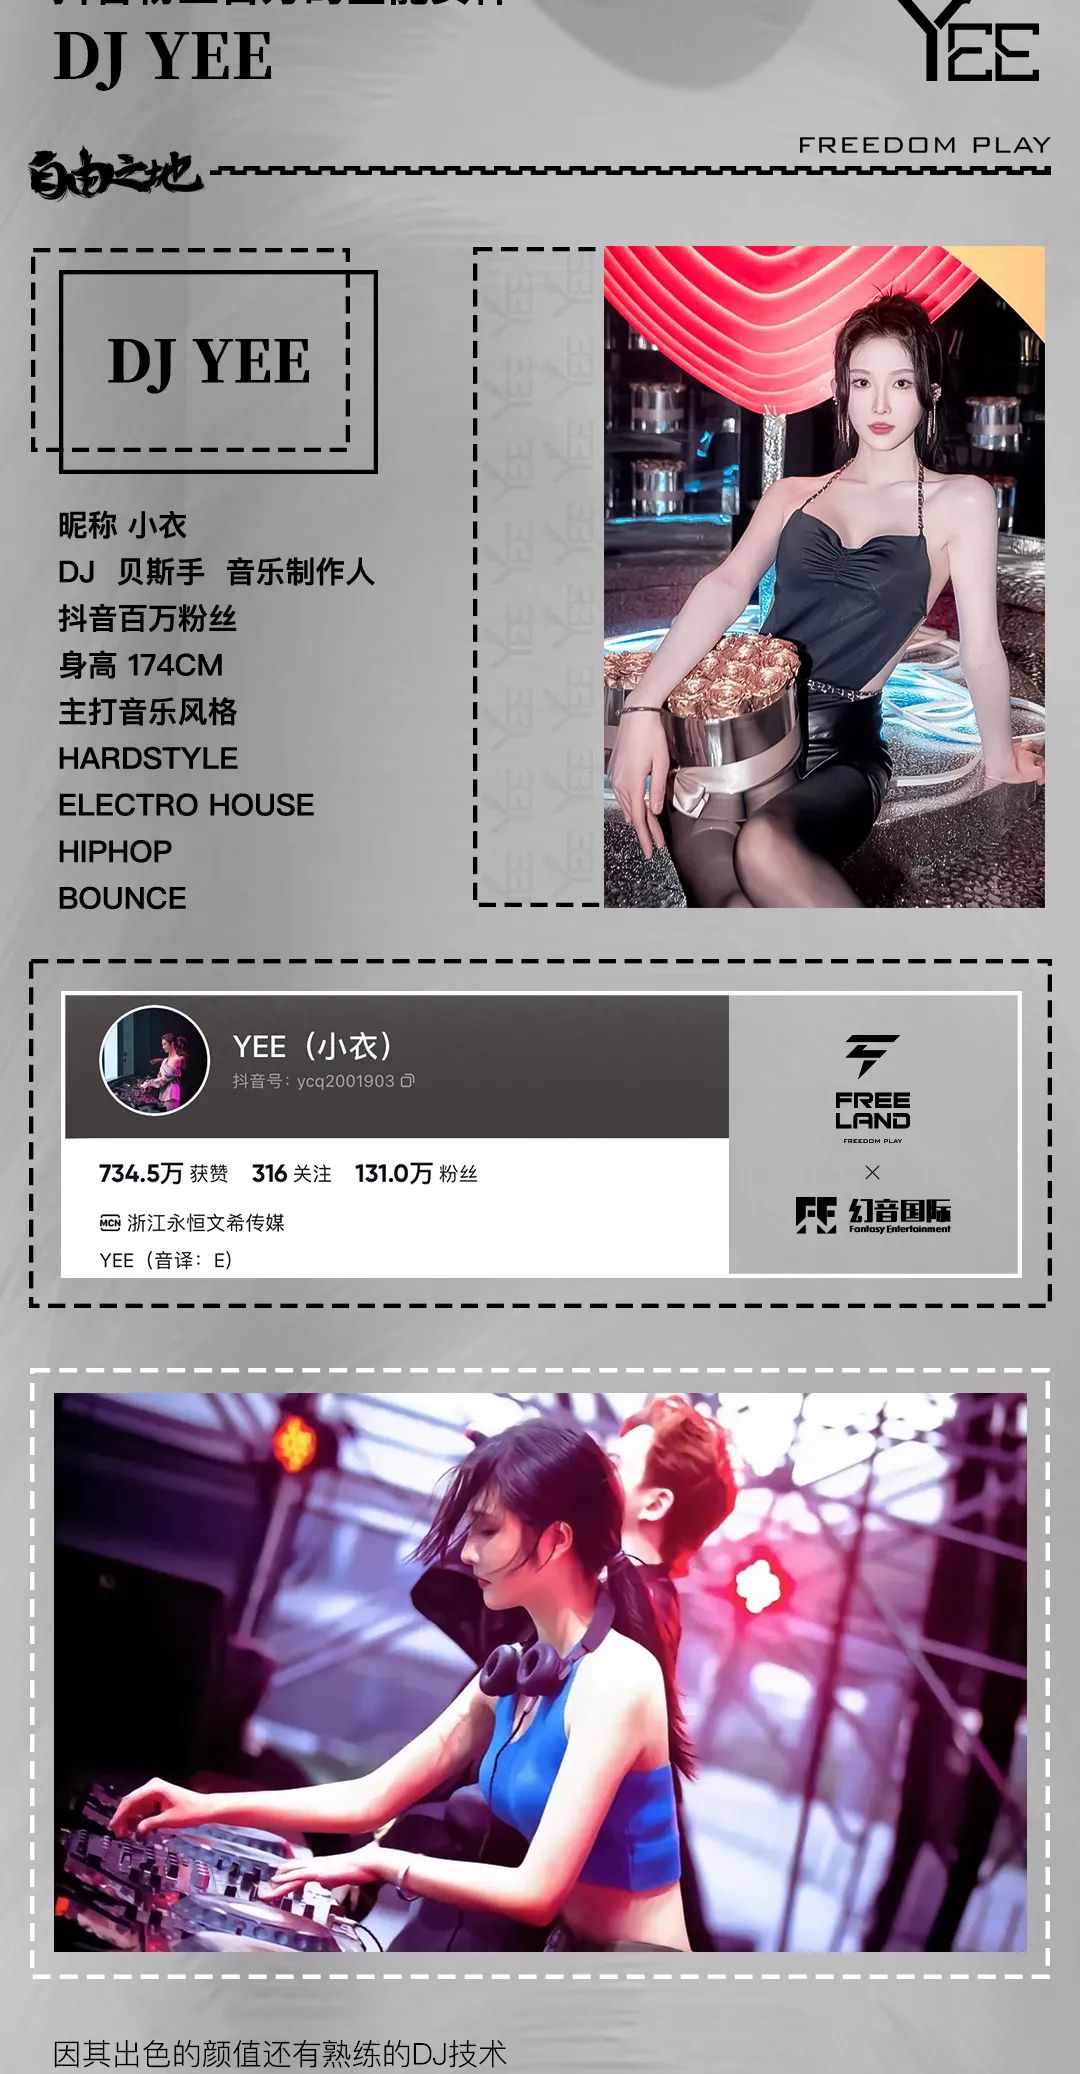 12/16 DJ YEE“斩男女神”唤醒你沉睡的荷尔蒙-长春自由之地酒吧/FREELAND CLUB